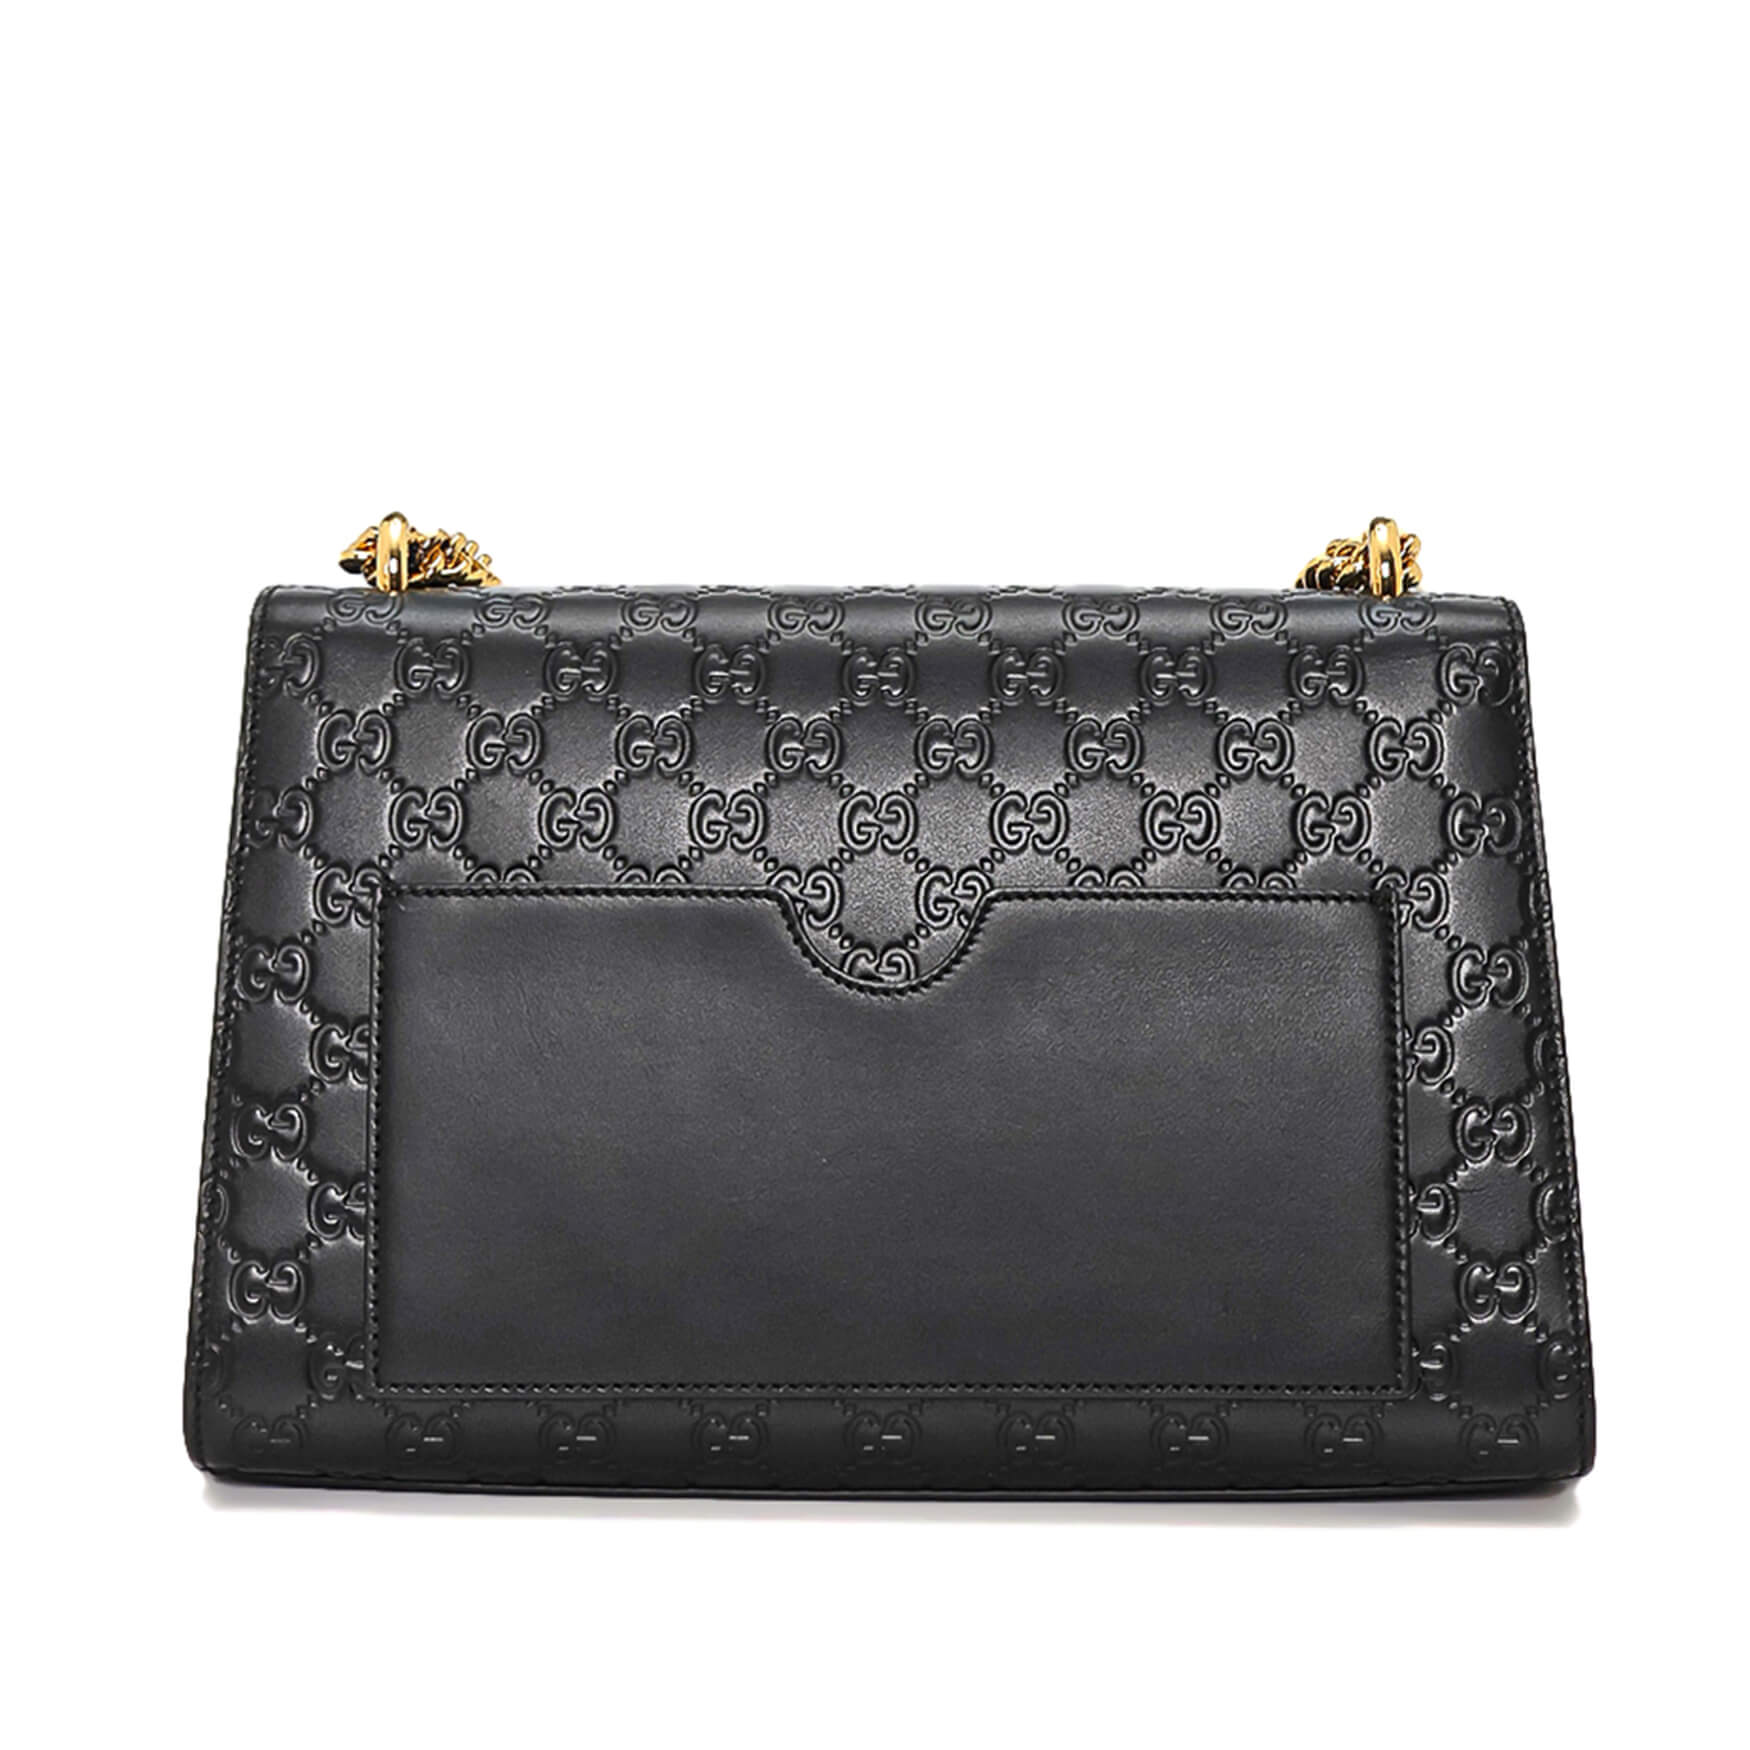 Gucci - Black Leather Padlock Chain Strap Shoulder Bag